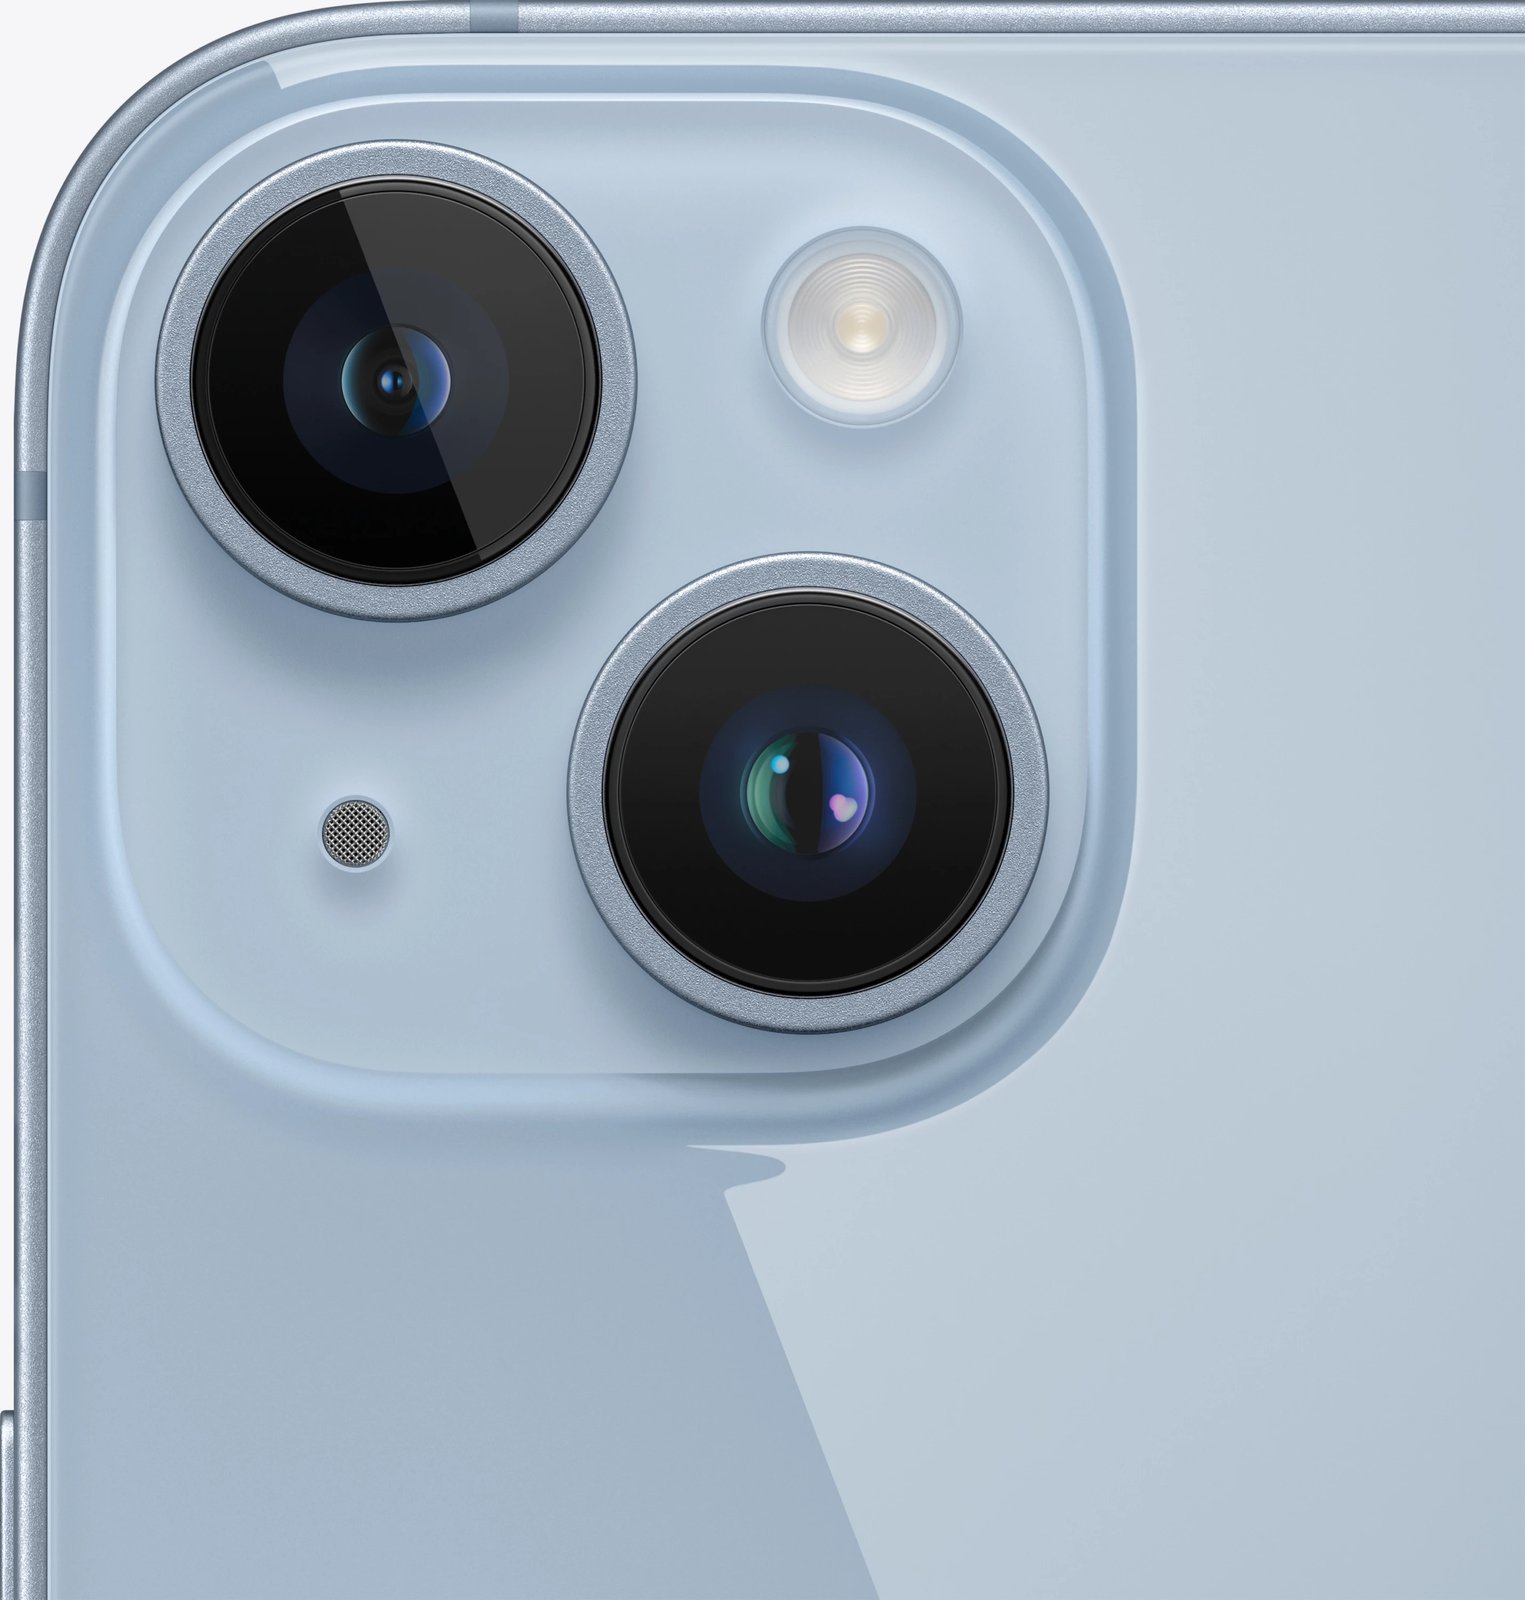 Celular Apple iPhone 14, 6.1", 128GB, i kaltër